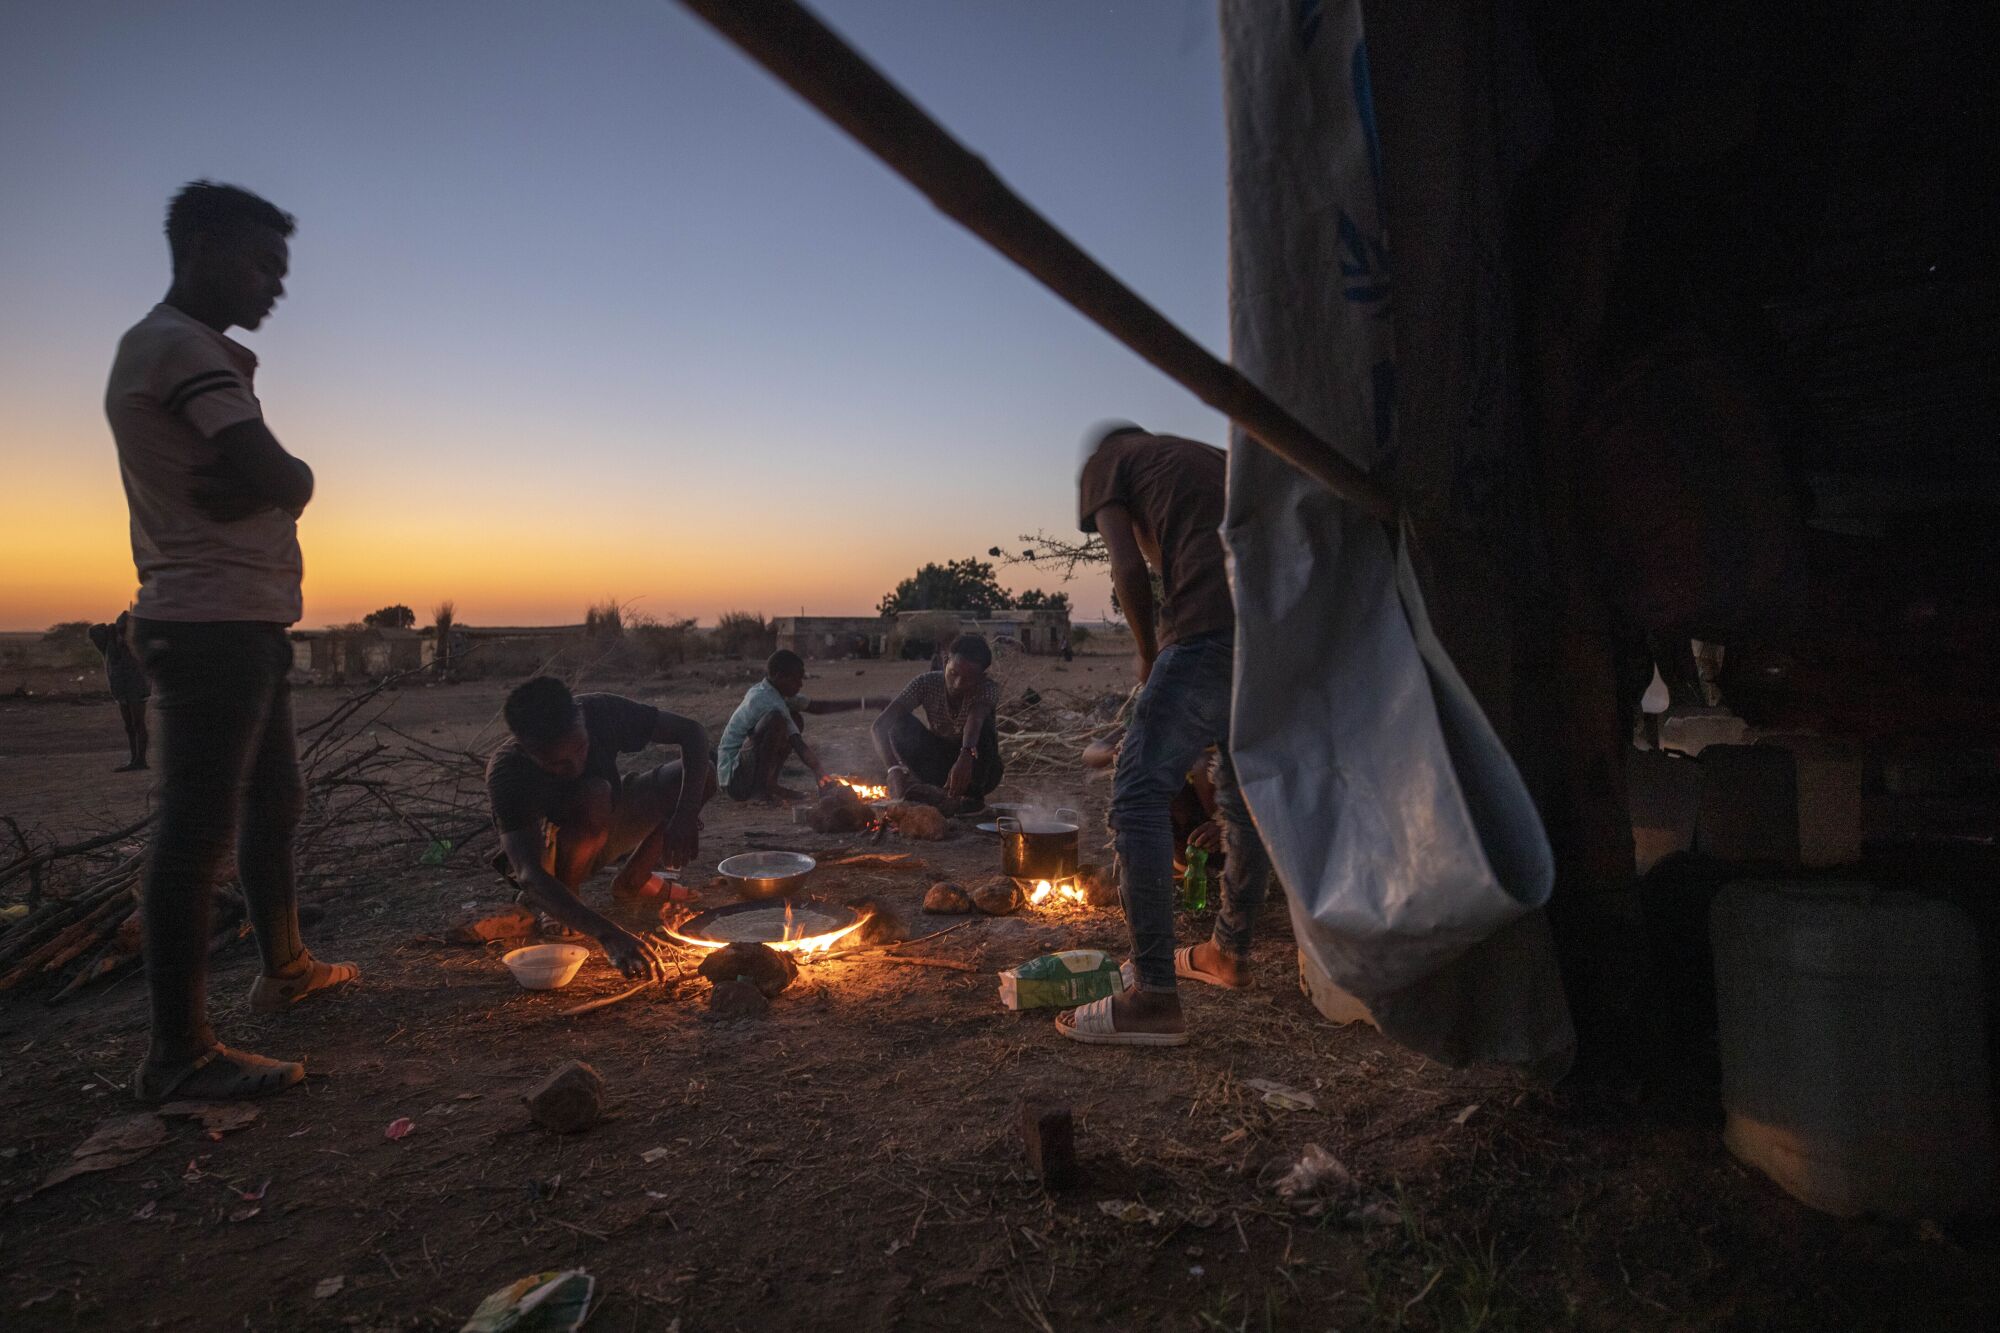 Tigray refugees light fires to prepare dinner at Umm Rakouba refugee camp Sudan